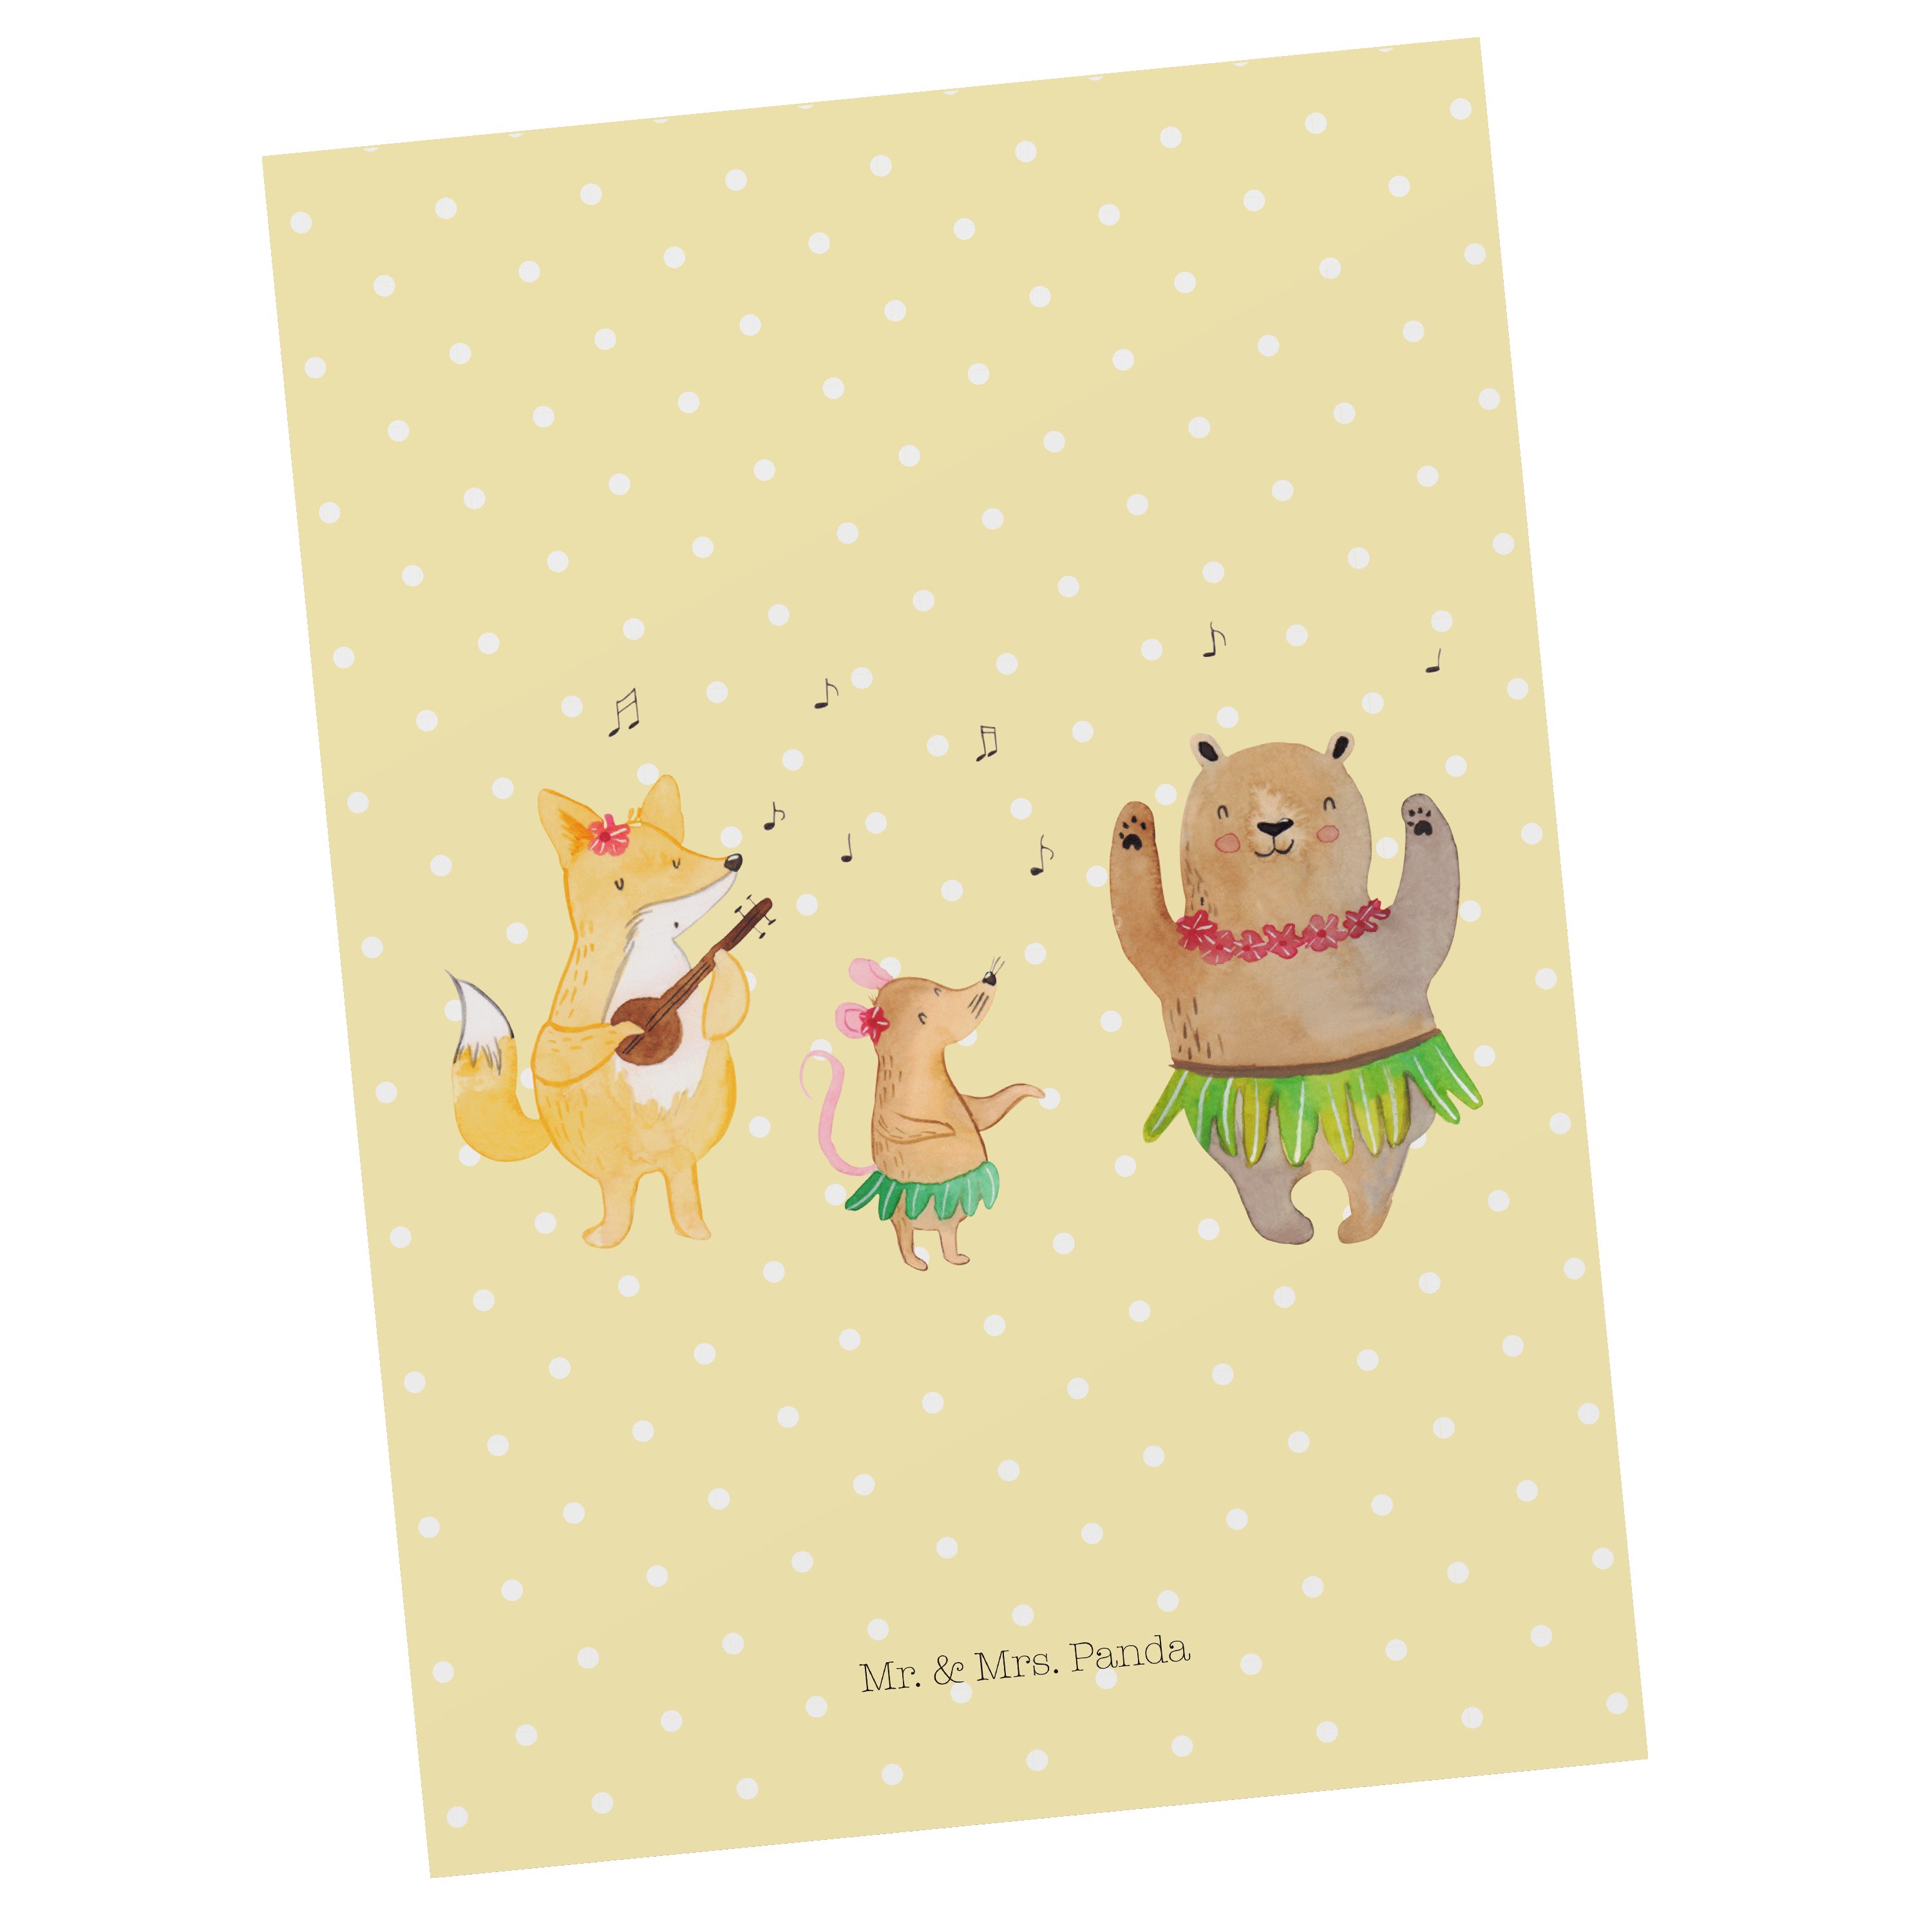 Mr. & Mrs. Panda Postkarte Waldtiere Aloha - Gelb Pastell - Geschenk, Karte, Leben, Gute Laune